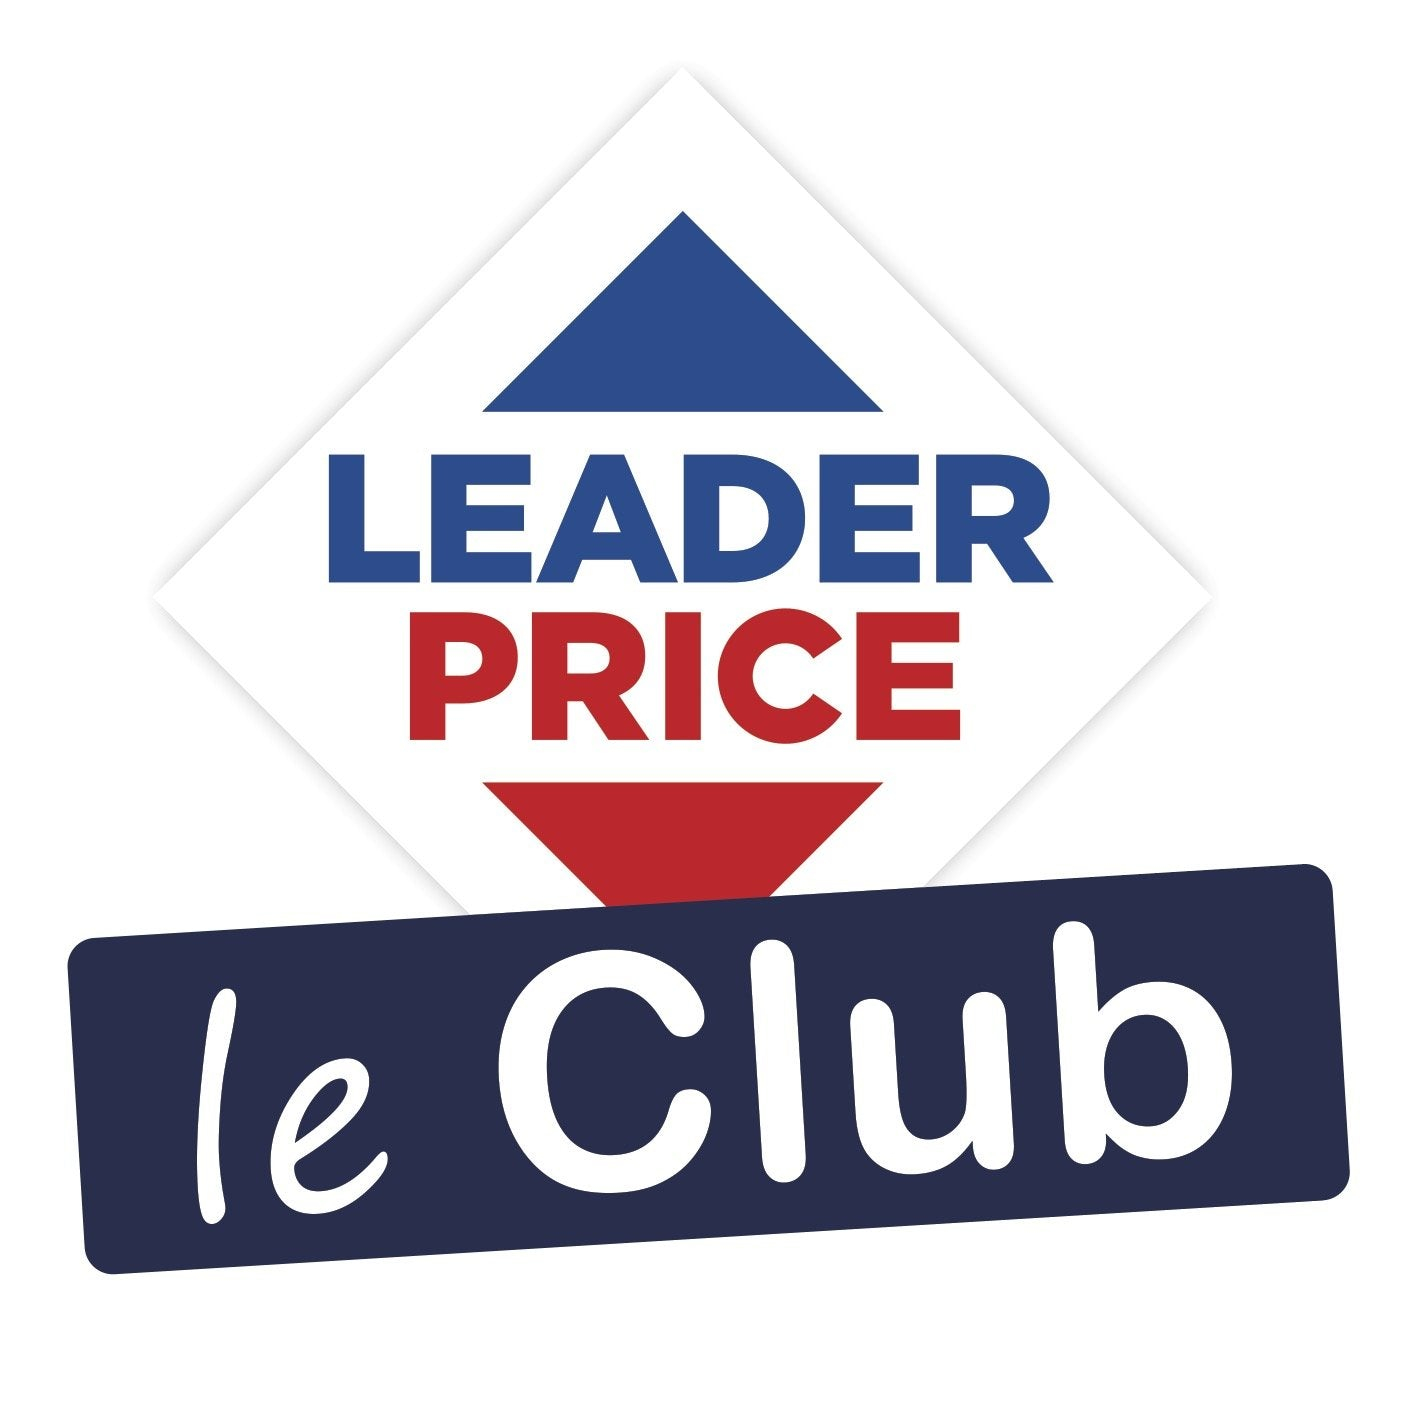 Le Club Leader Price logo